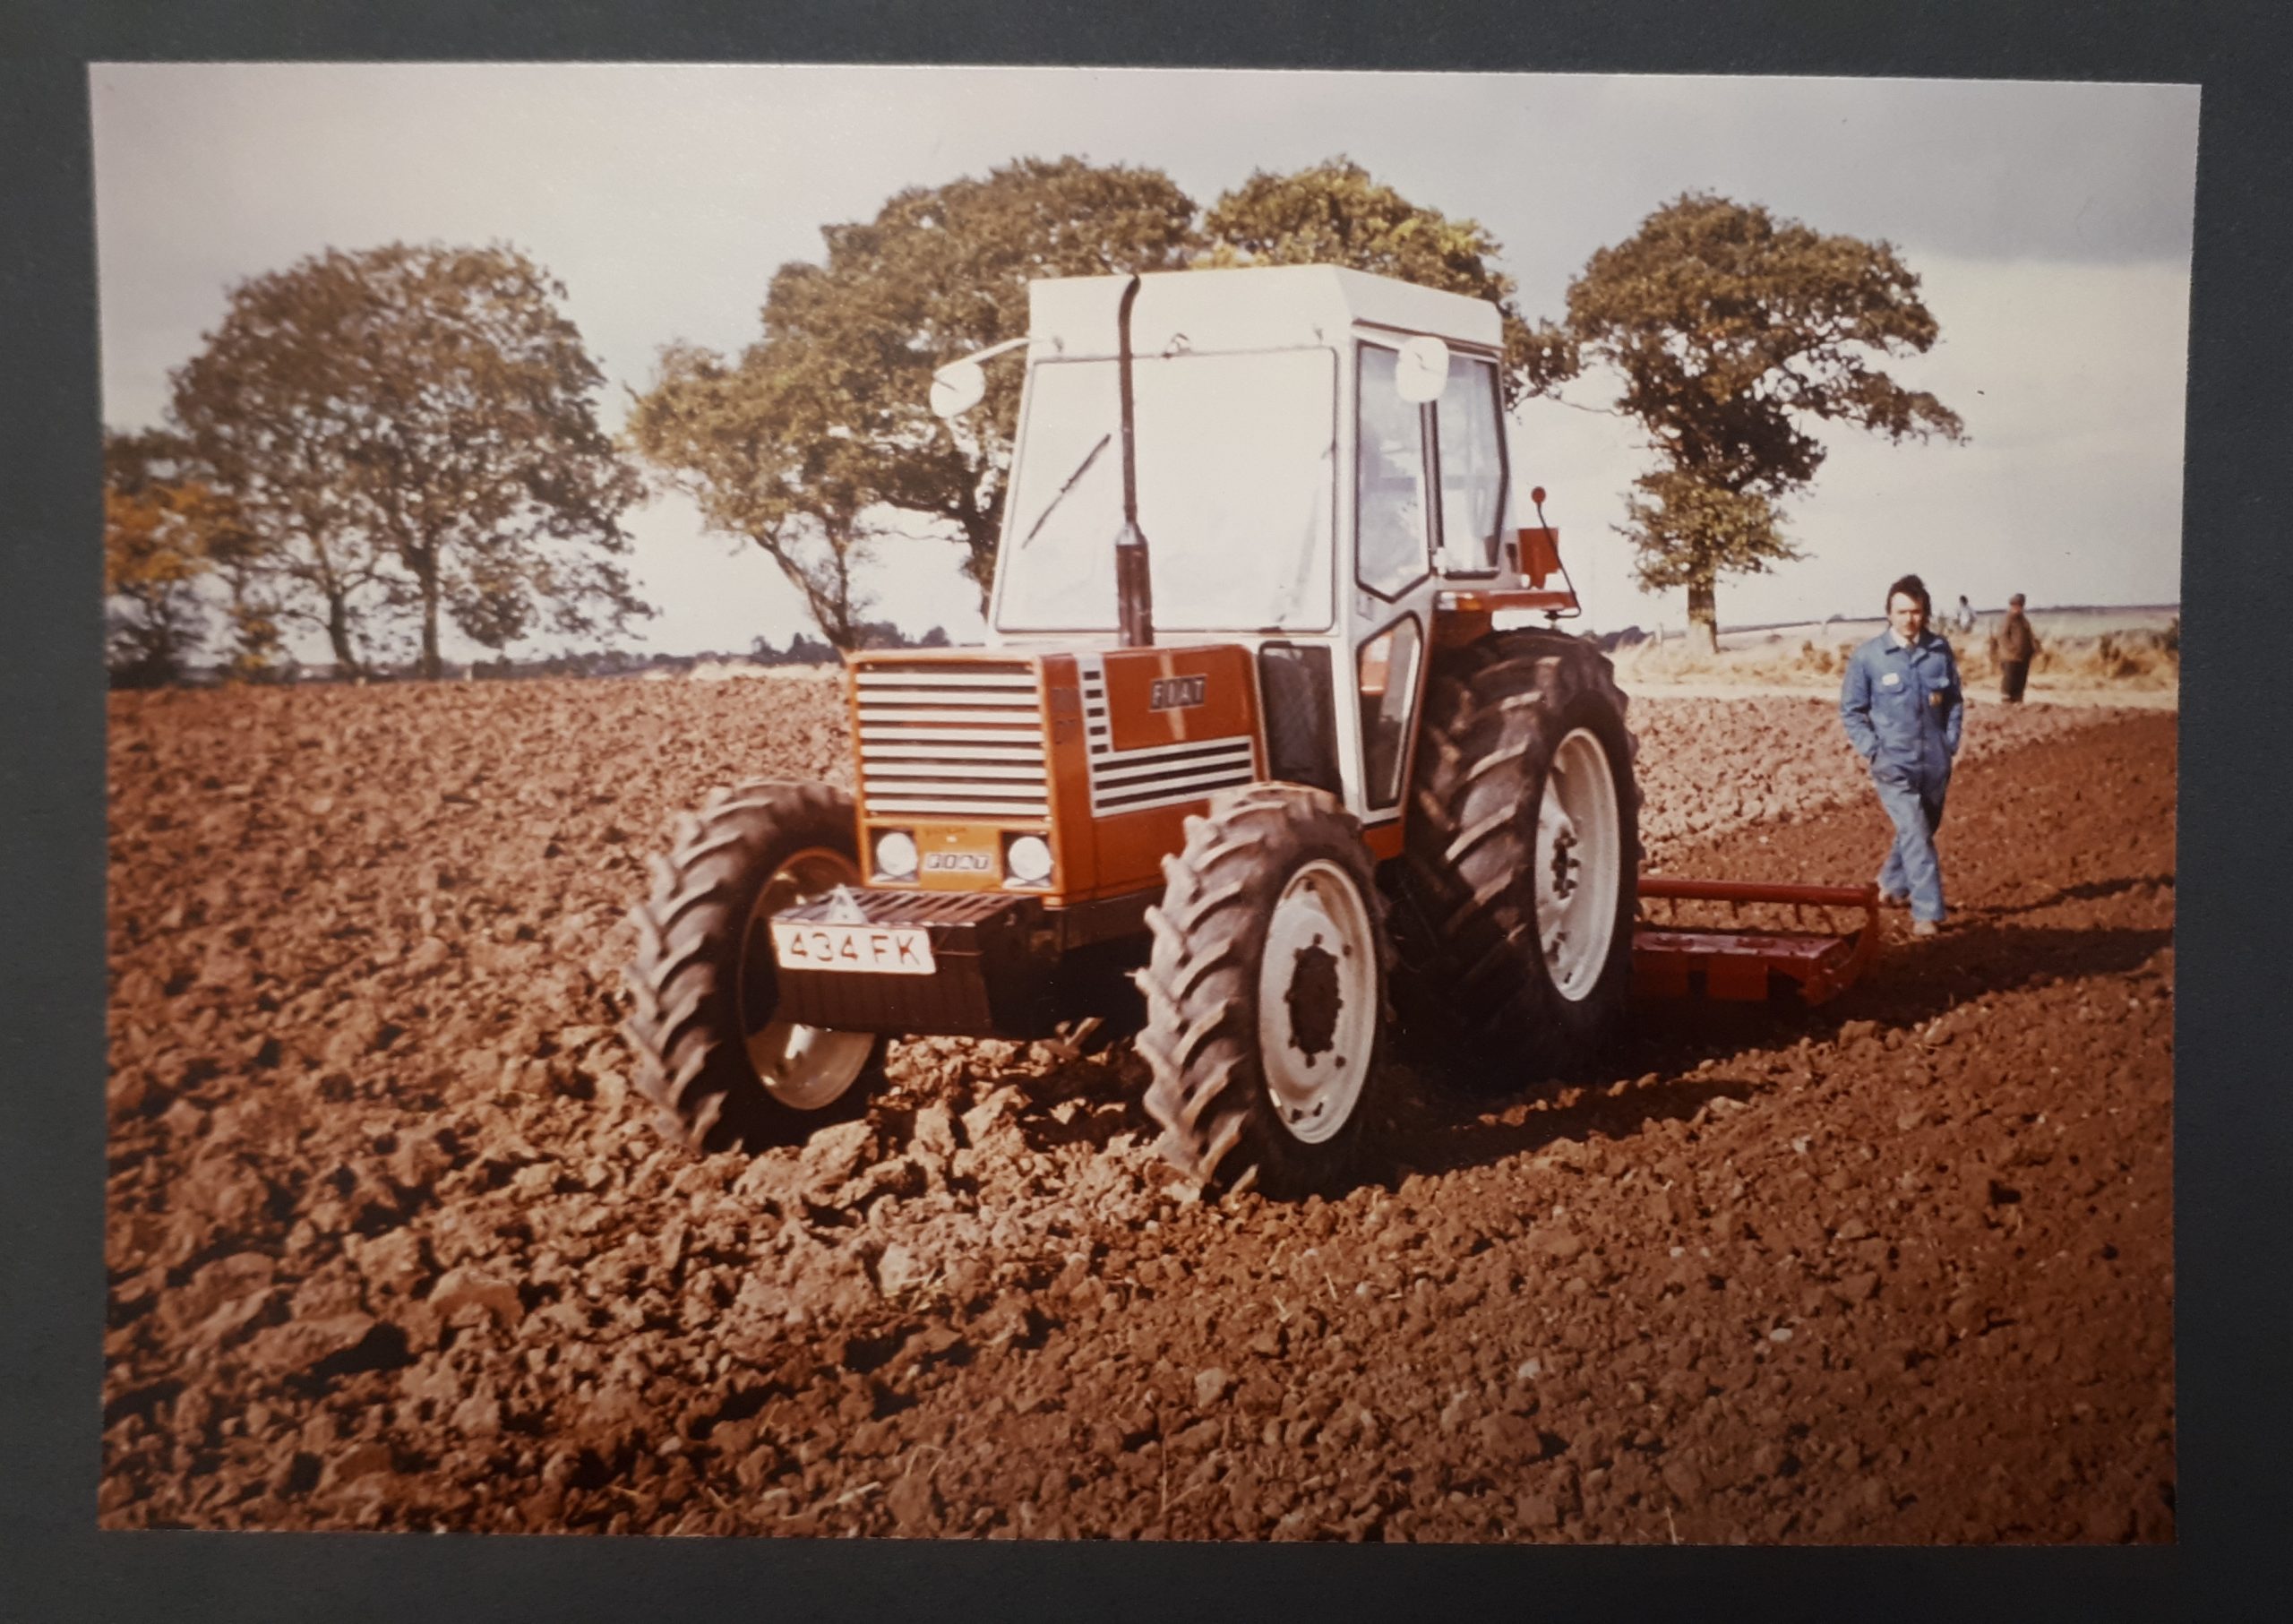 80 H.P. Tractor and Cultivator, Patchett's Farm, Tardebigge Ref: 899.156 BA 1332 WPS 55317 © J. Wormington Esq.